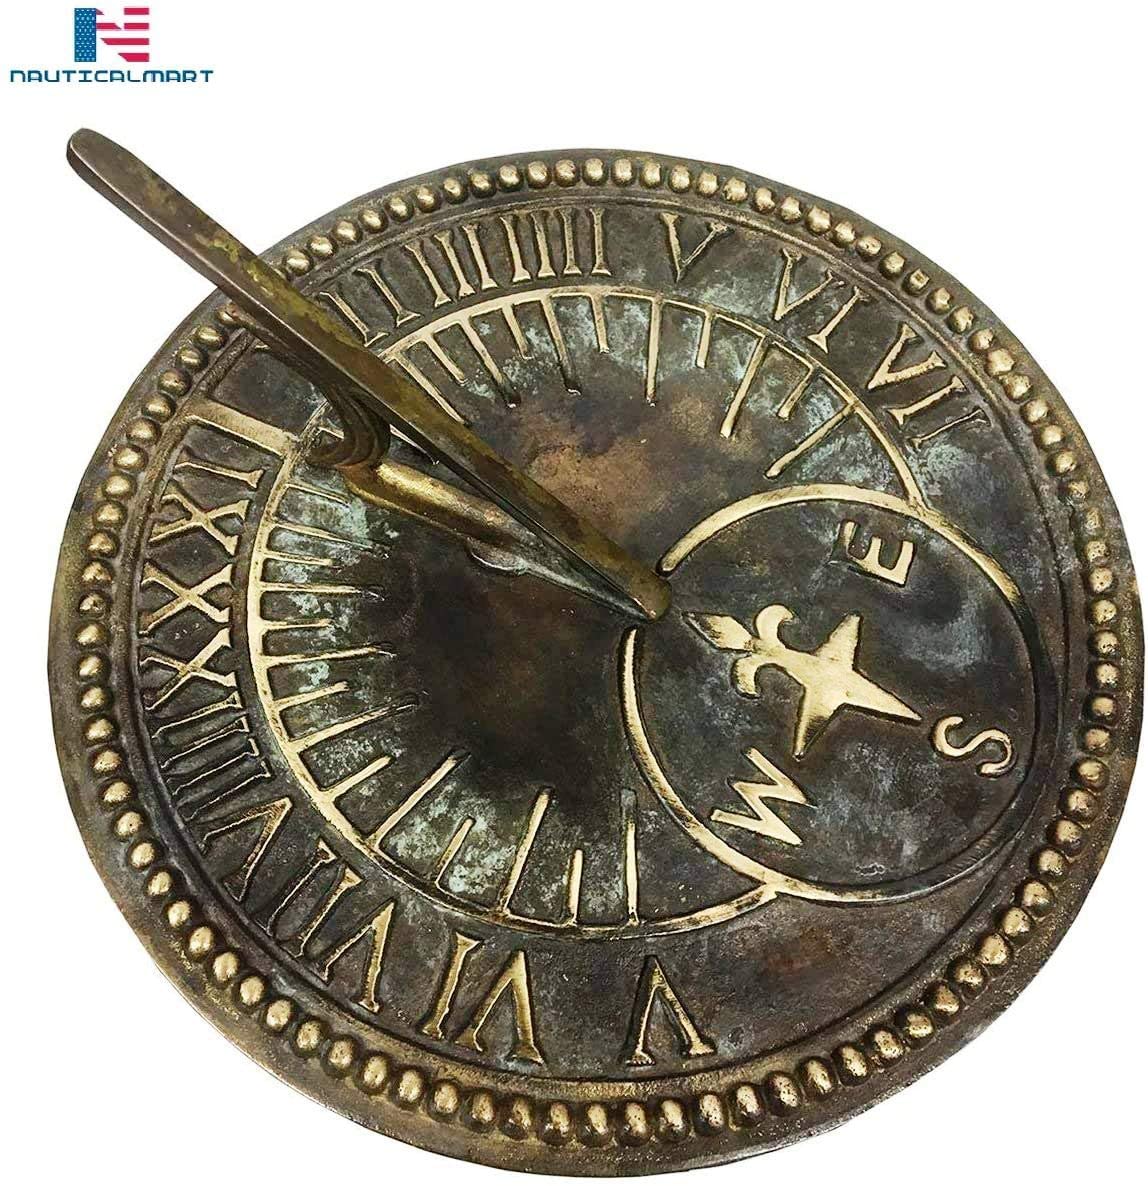 NauticalMart Roman Sundial, Solid Brass with Light Verdi Highlights, 8-Inch Diameter - image 4 of 4